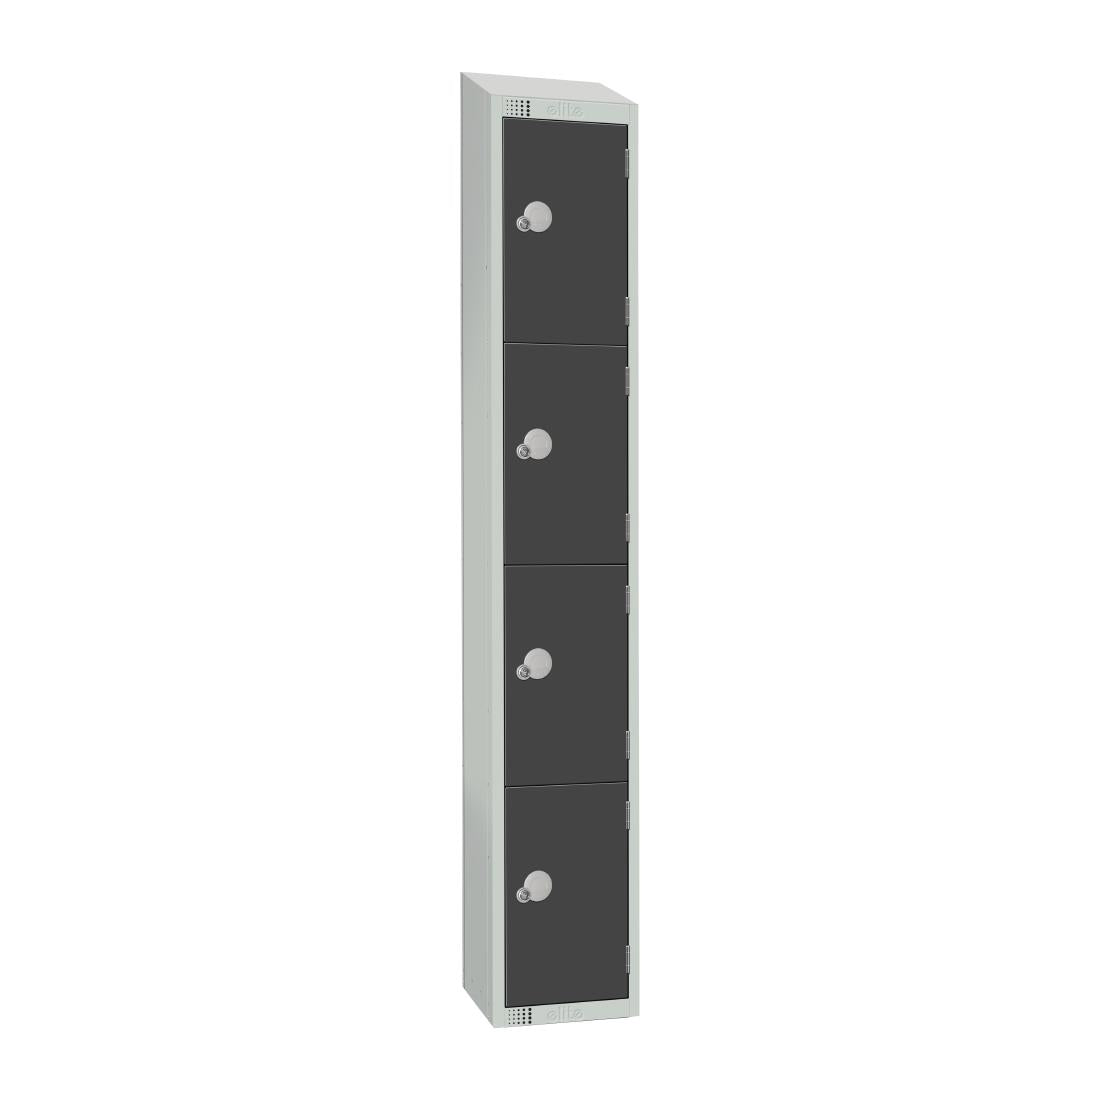 GR680-ELS Elite Four Door Electronic Combination Locker with Sloping Top Graphite Grey JD Catering Equipment Solutions Ltd